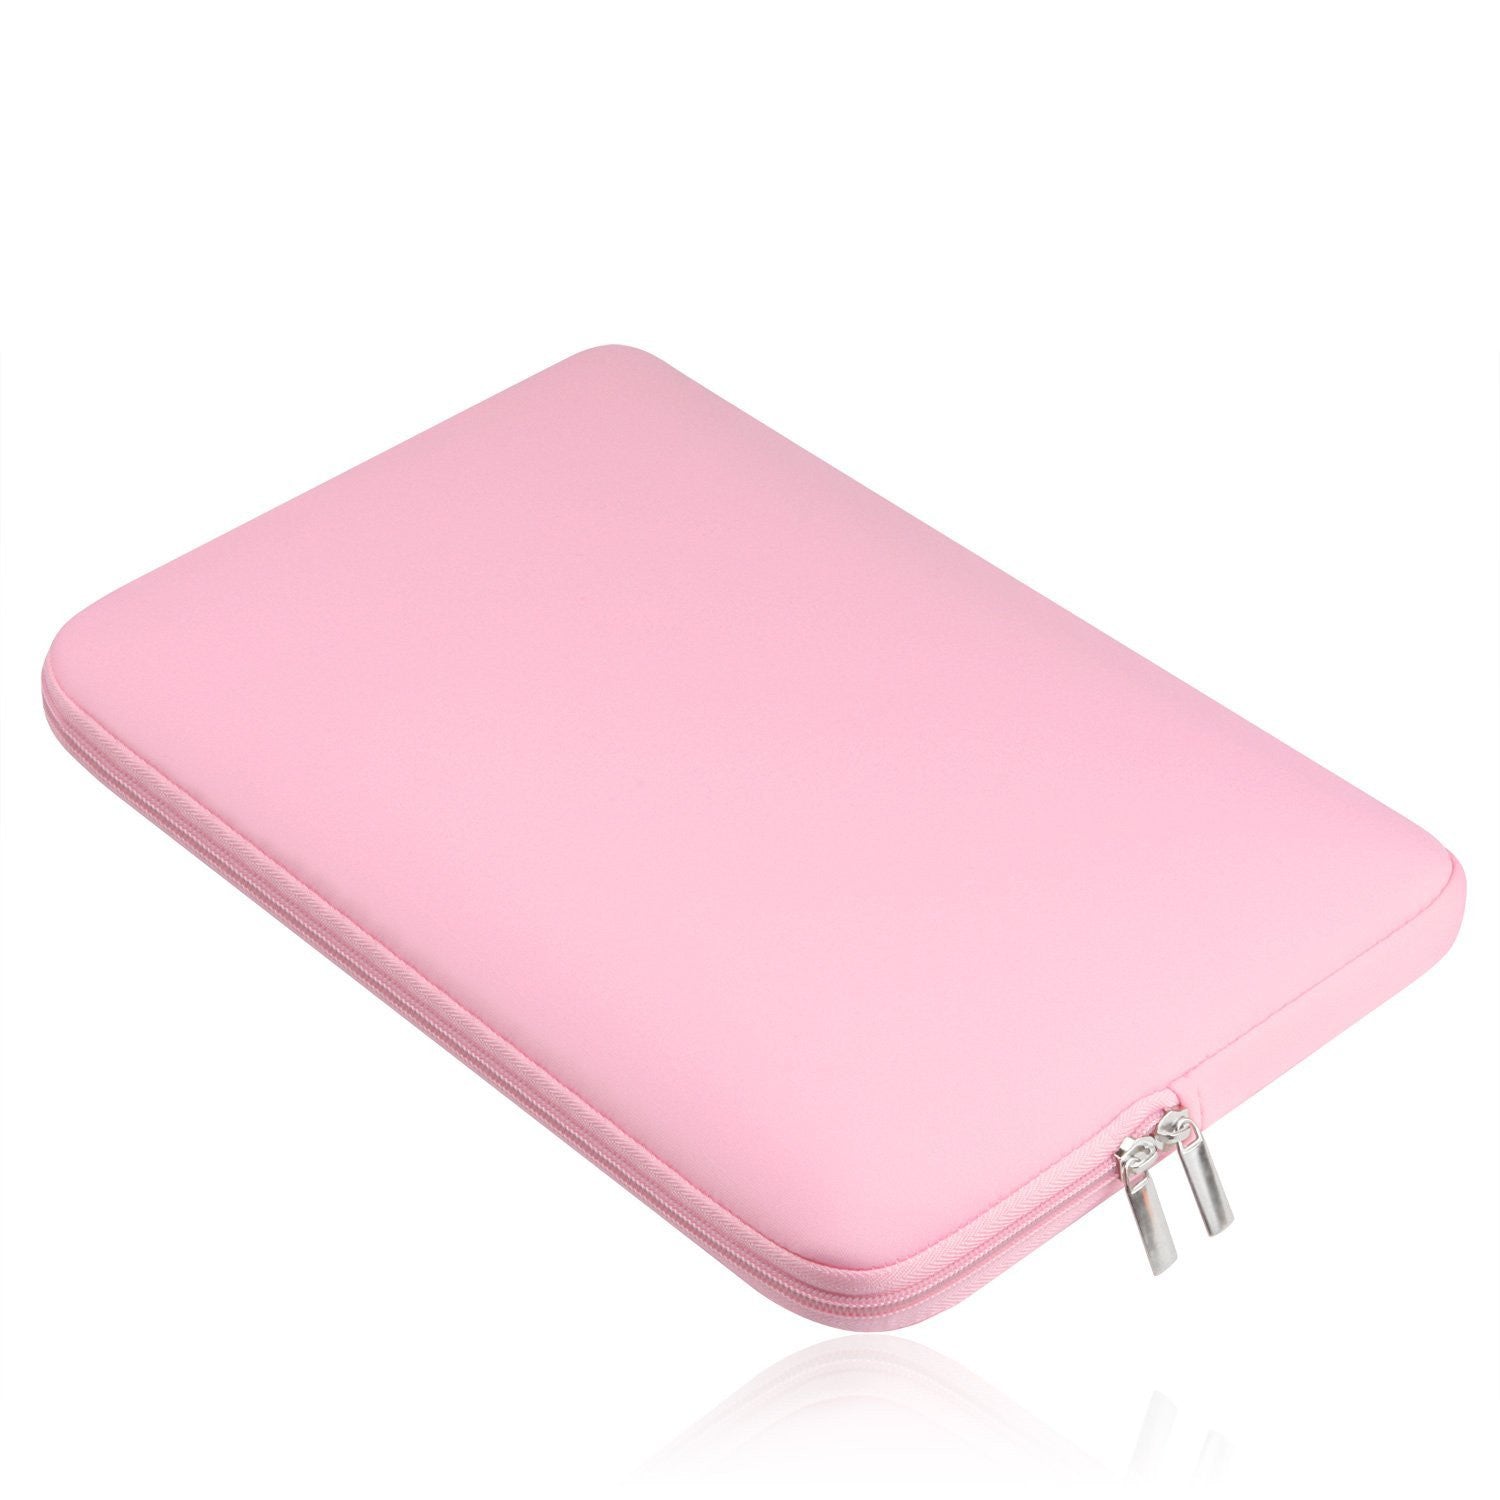 Laptop Sleeve - Pink - colourbanana